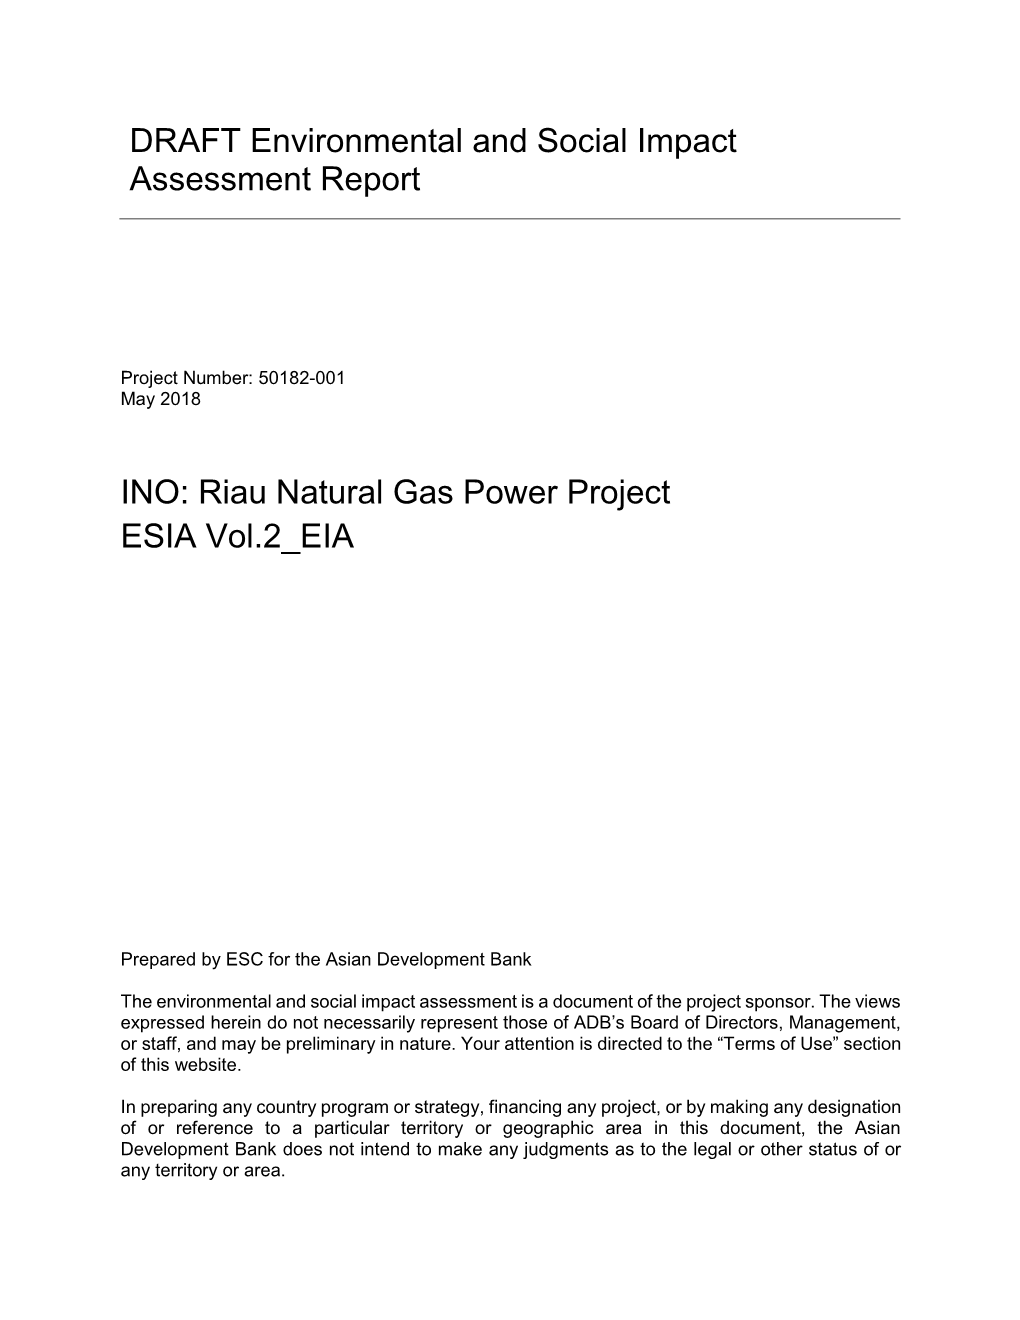 Riau Natural Gas Power Project ESIA Vol.2 EIA